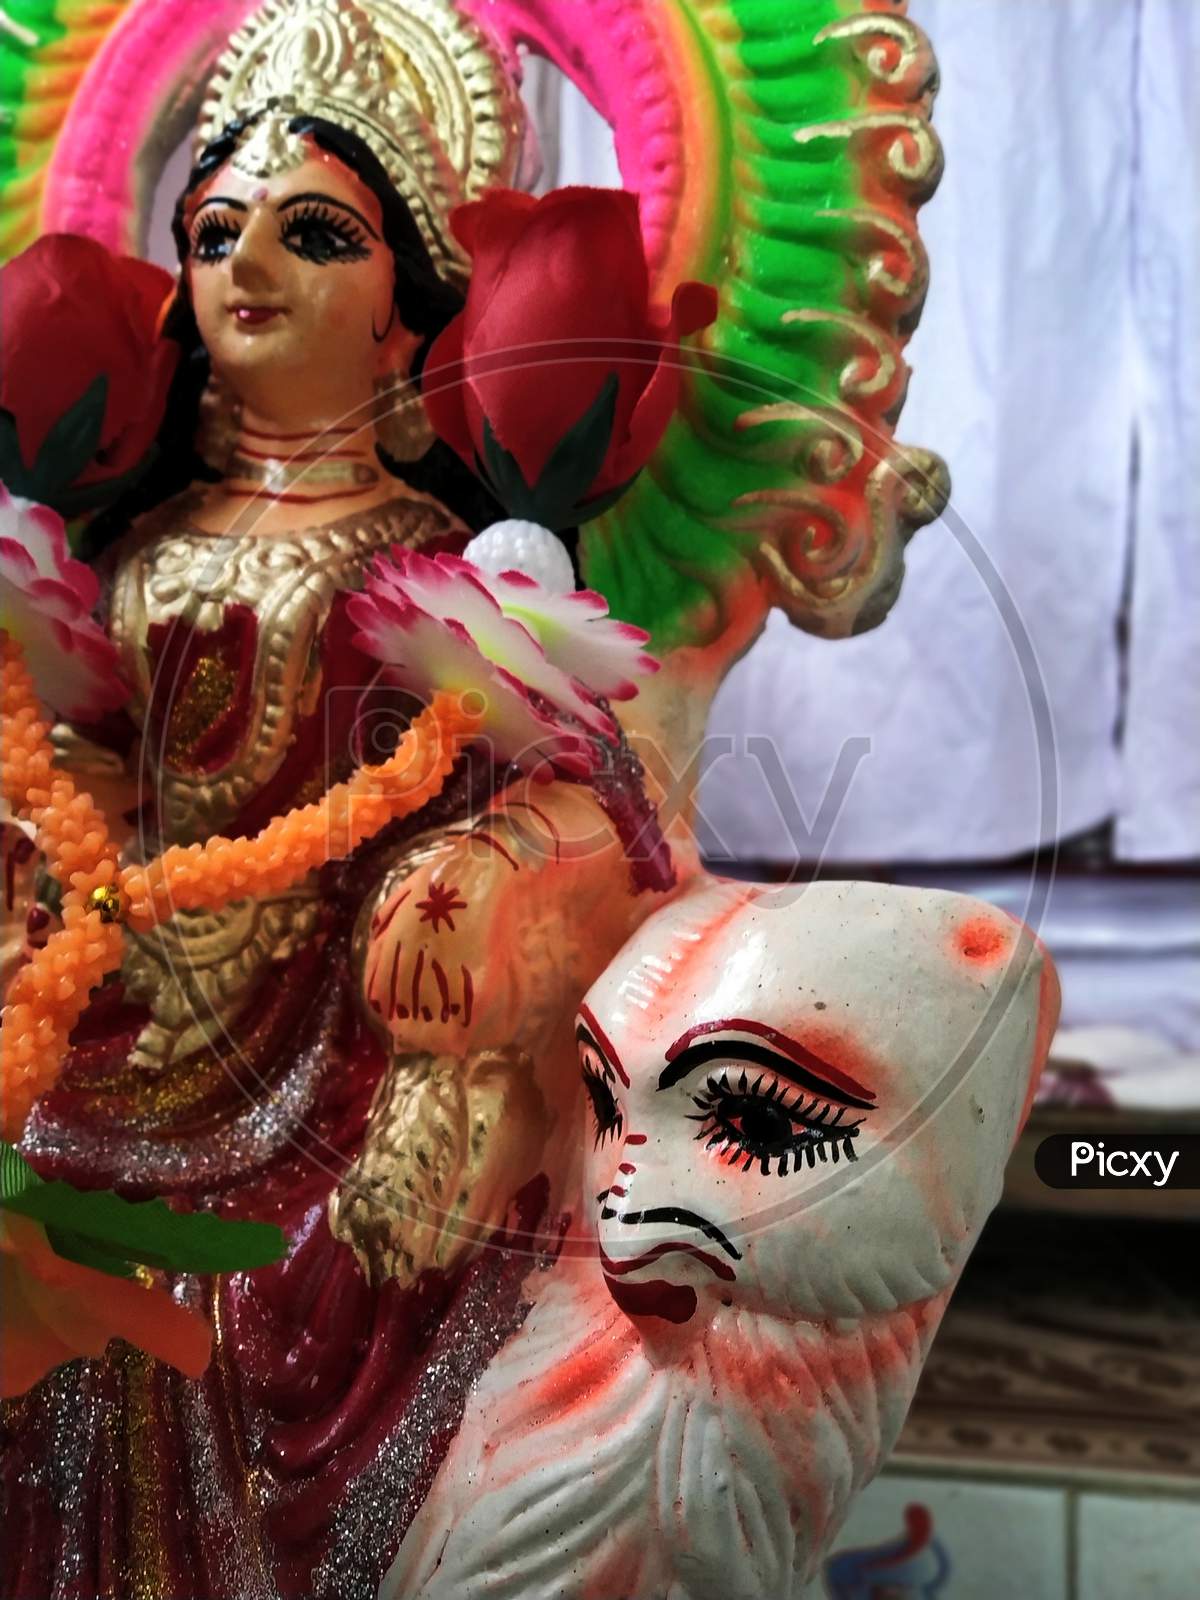 Close Image Of Clay Made Goddess Laxmi Idol For Worship In Hindu Culture